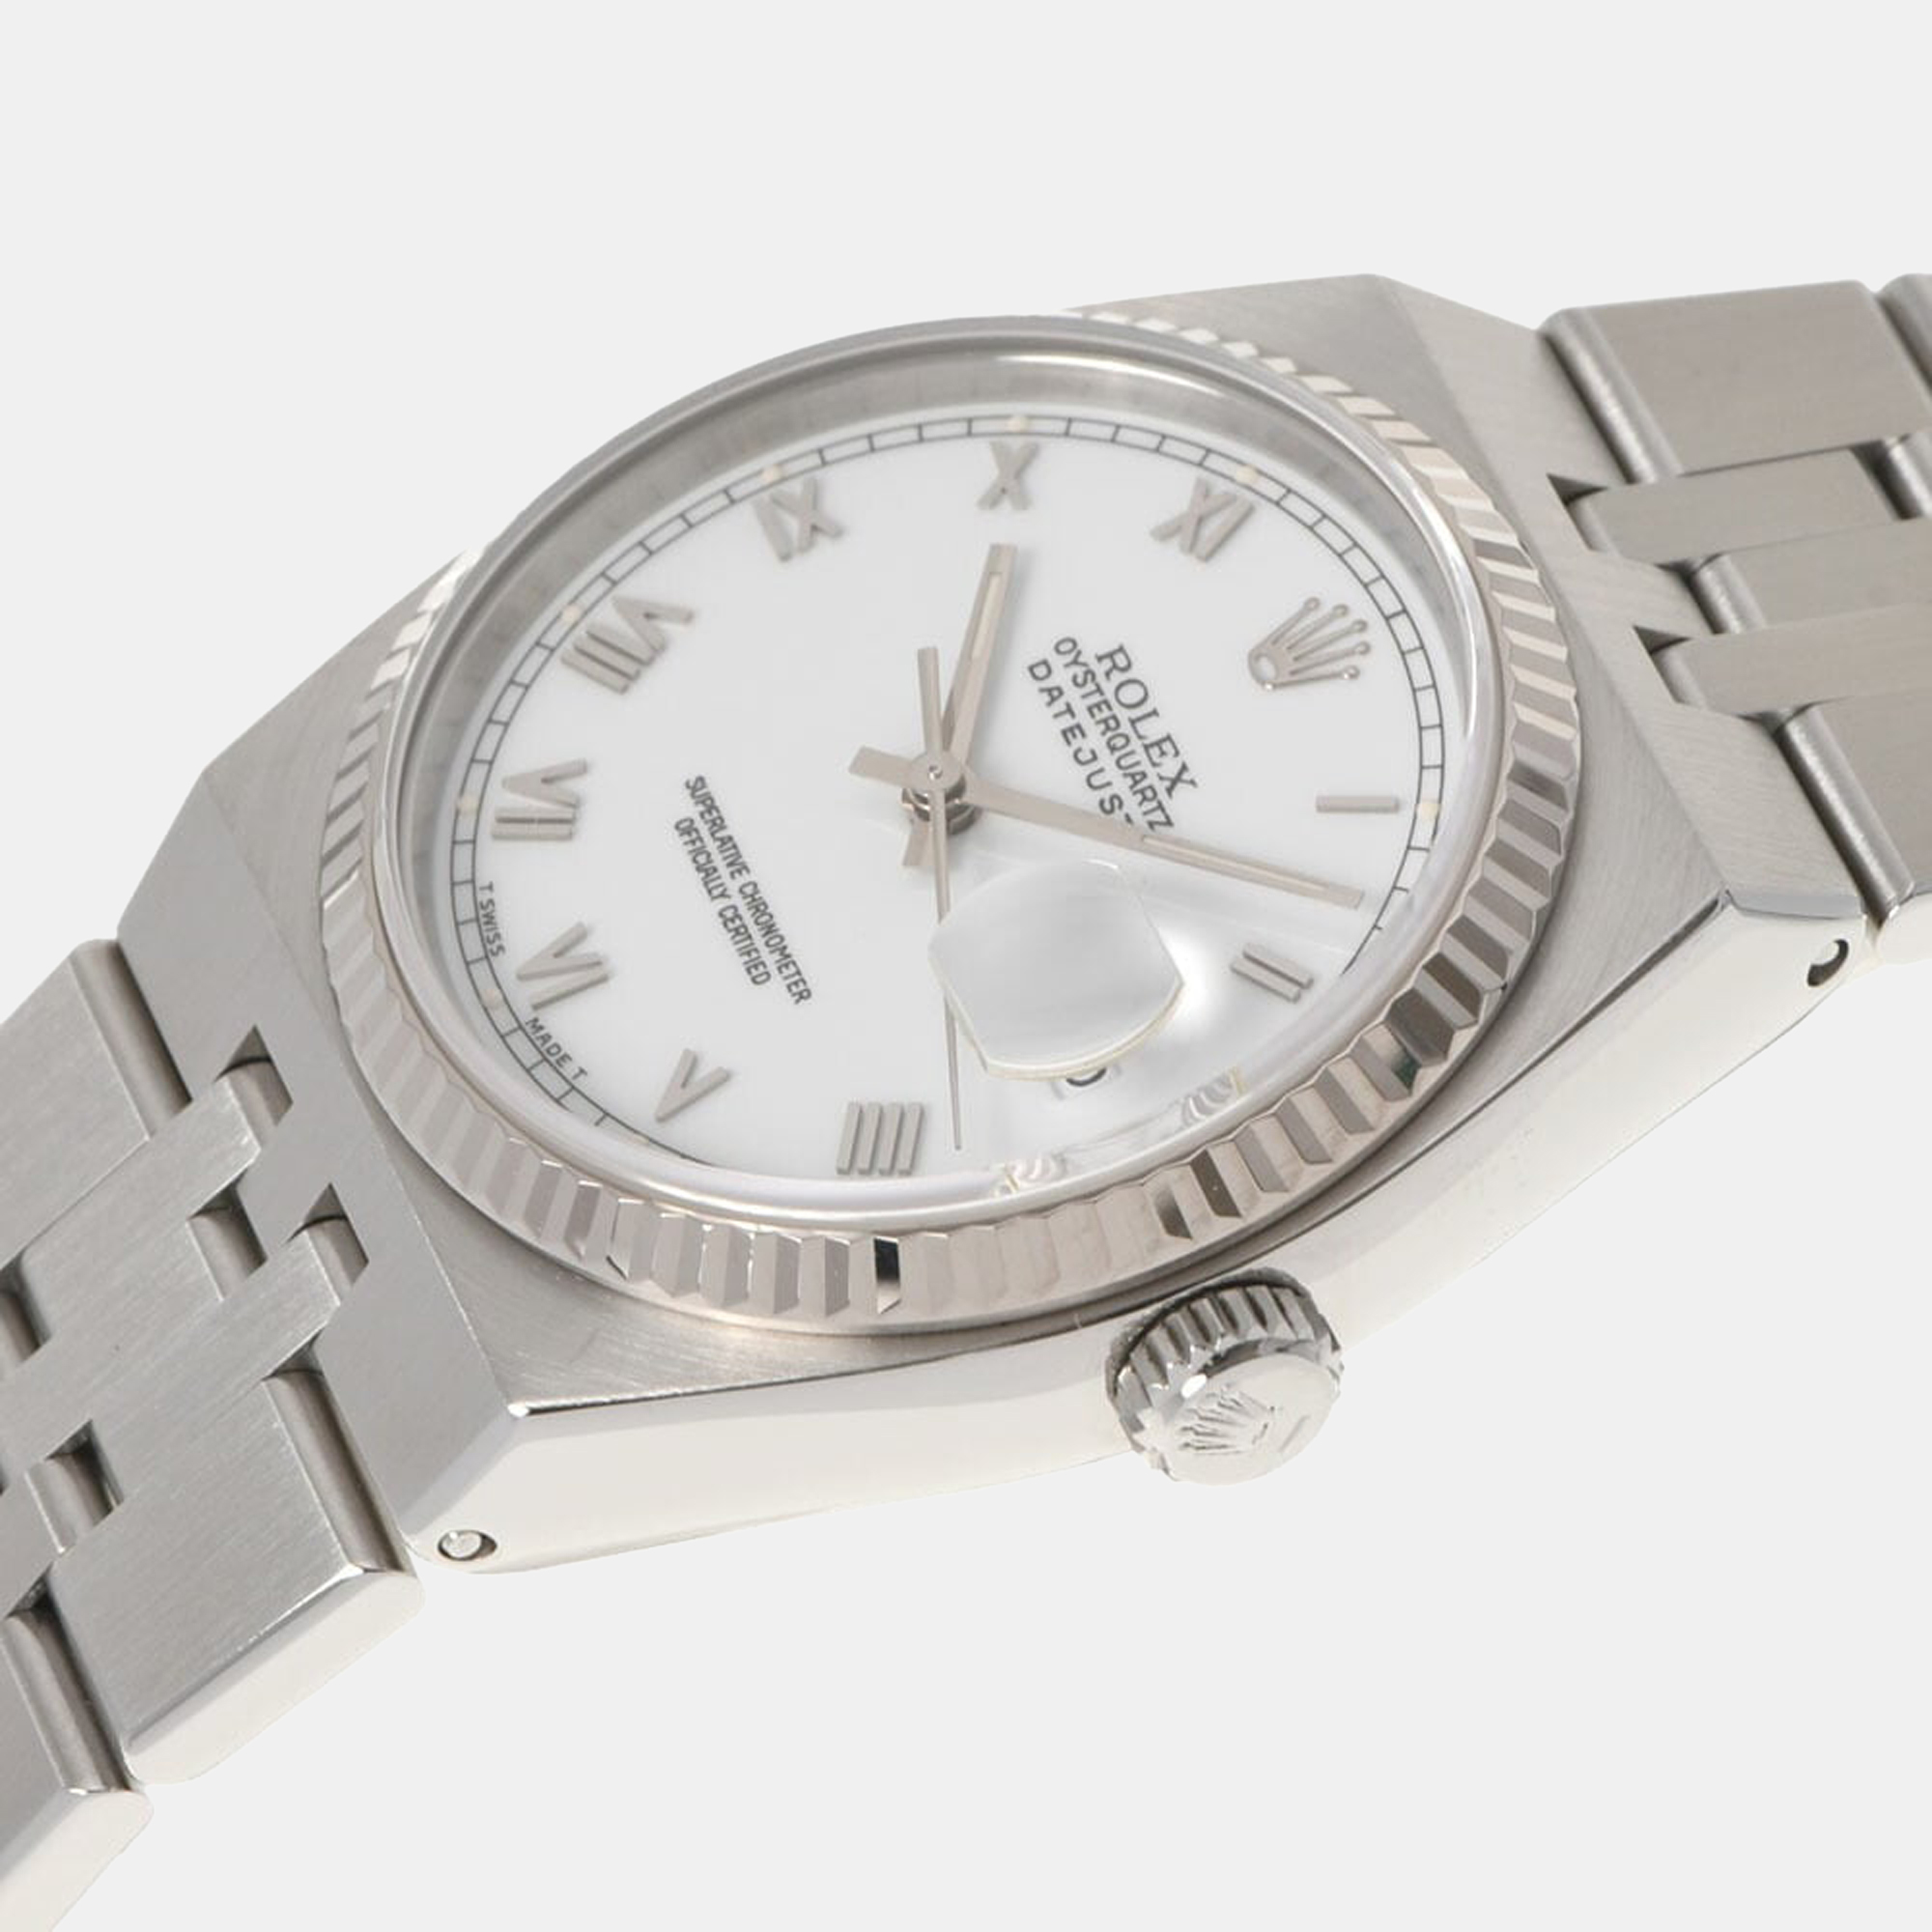 

Rolex White 18k White Gold And Stainless Steel Datejust Oysterquartz 17014 Quartz Men's Wristwatch 36 mm